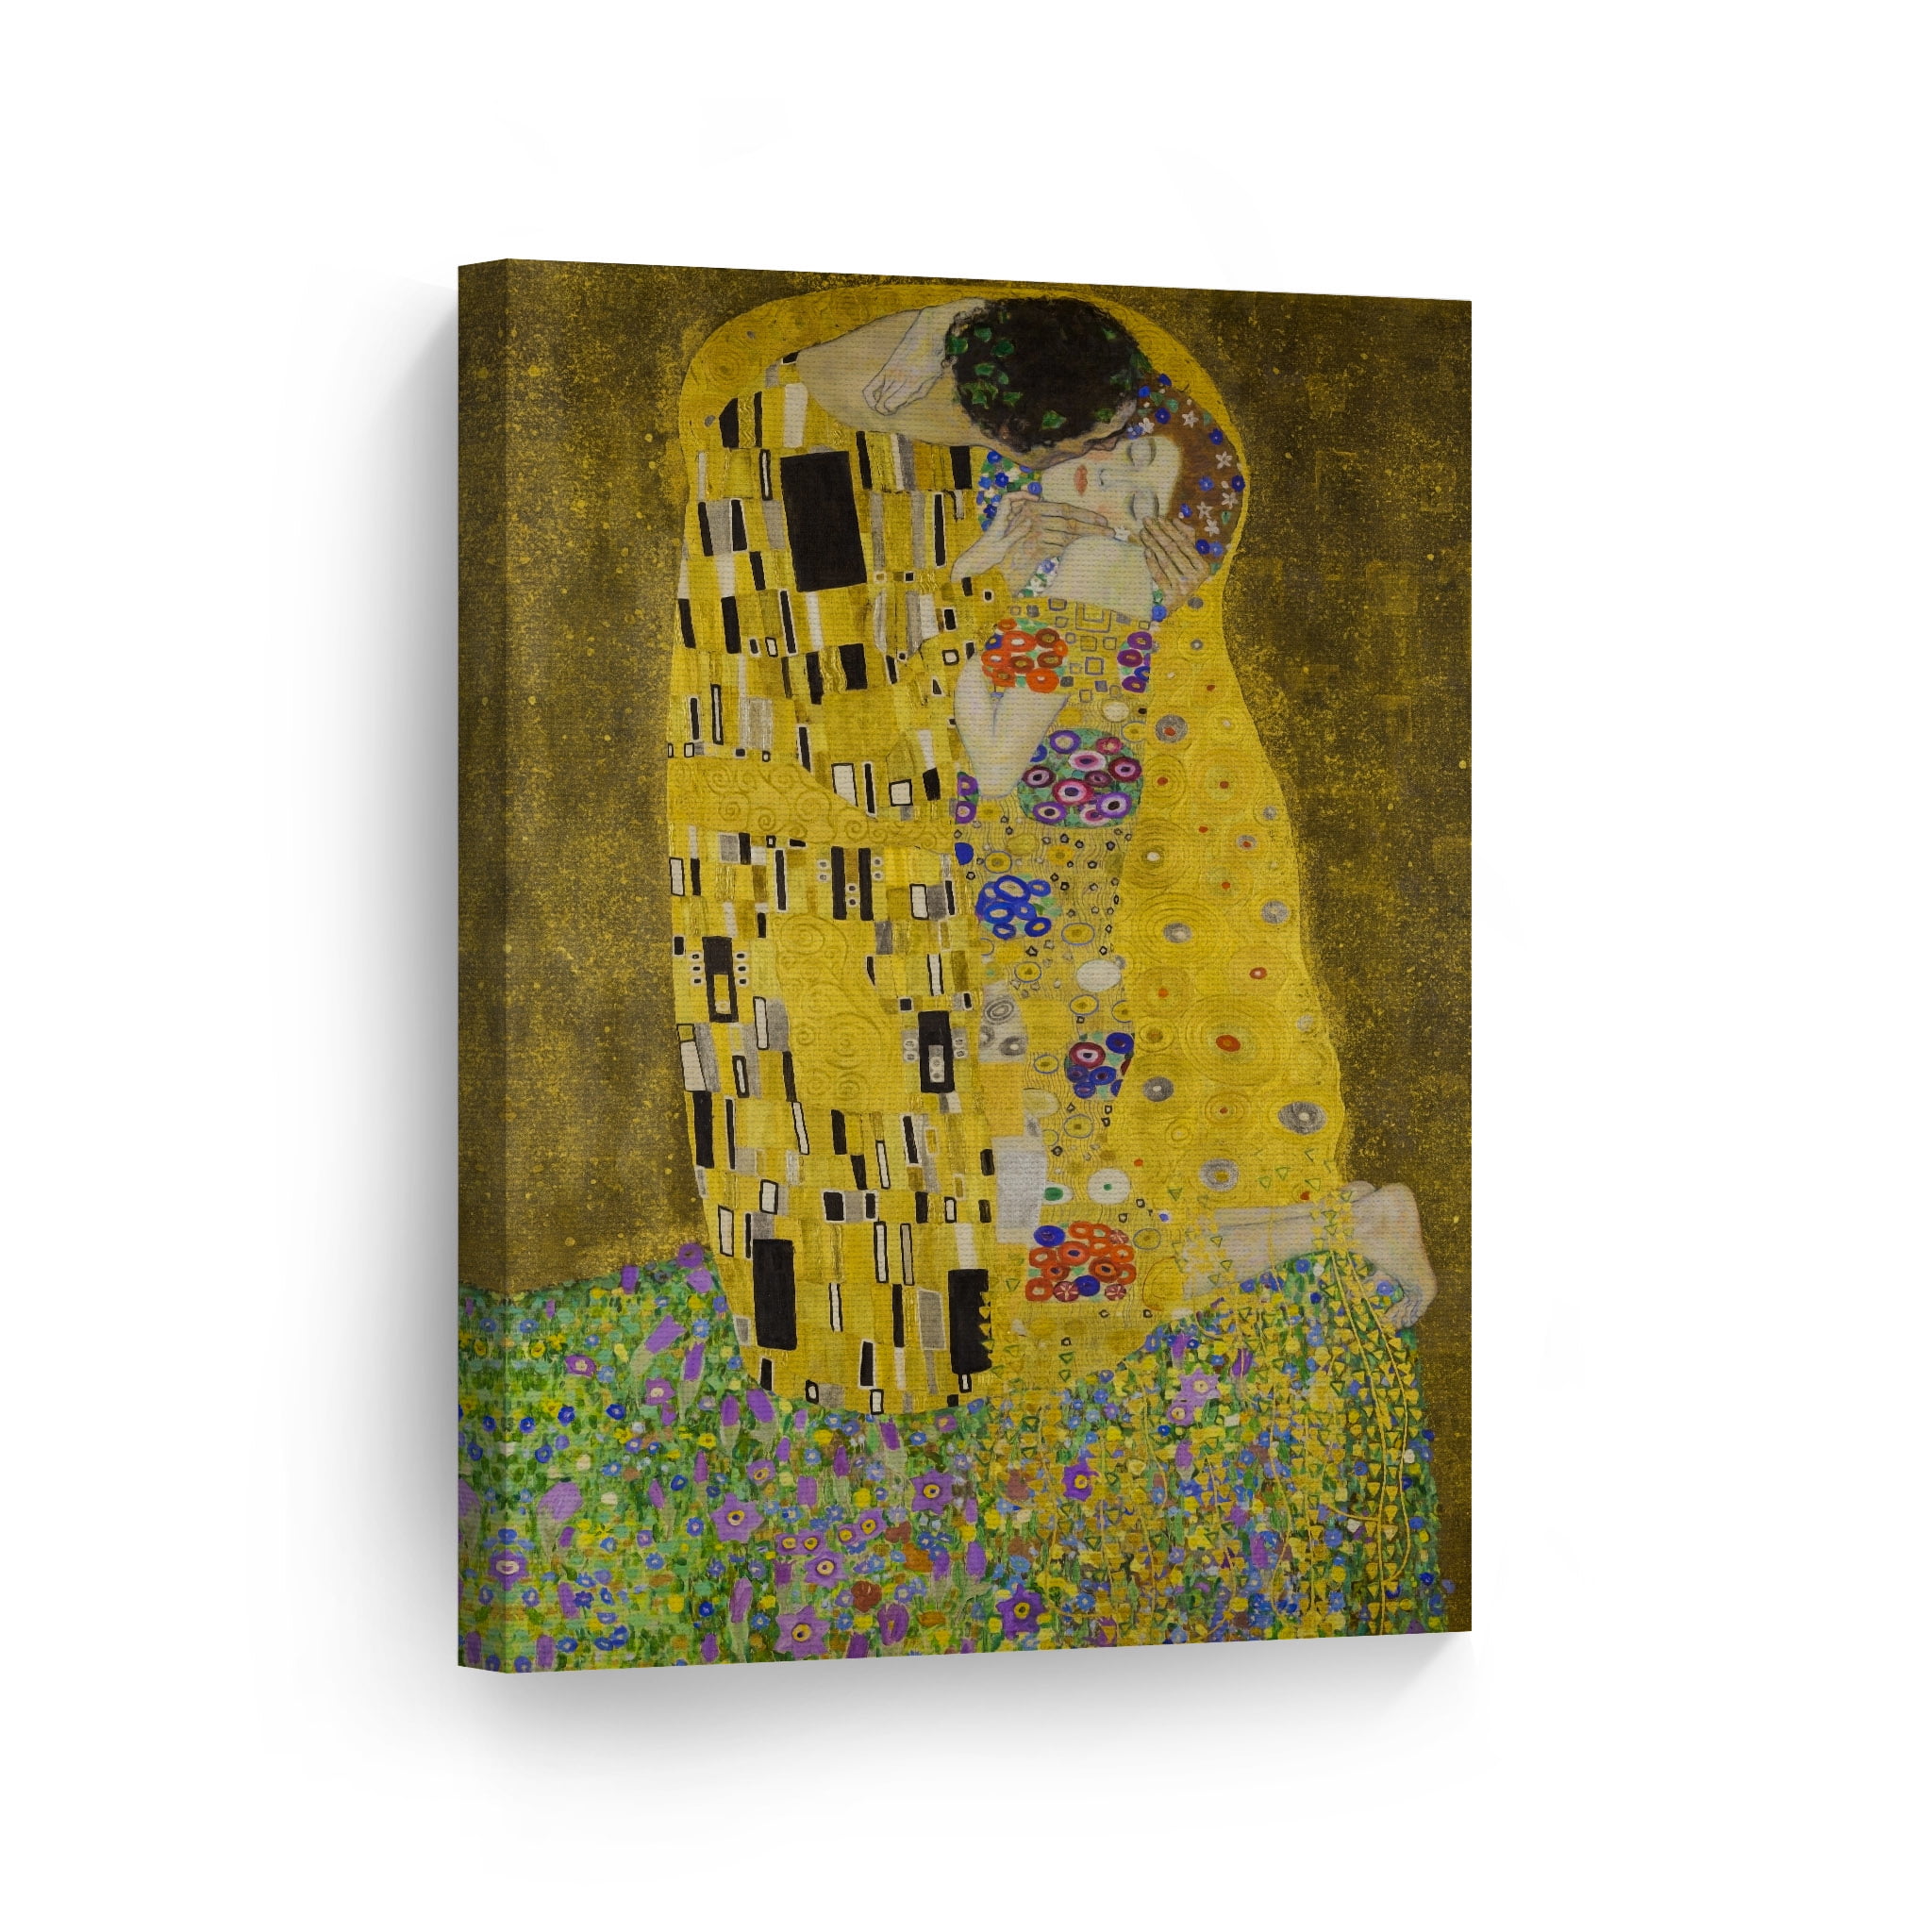 "The Kiss" by Gustav Klimt Wall26 Canvas Art Home Decor-16x16 Golden Phase 